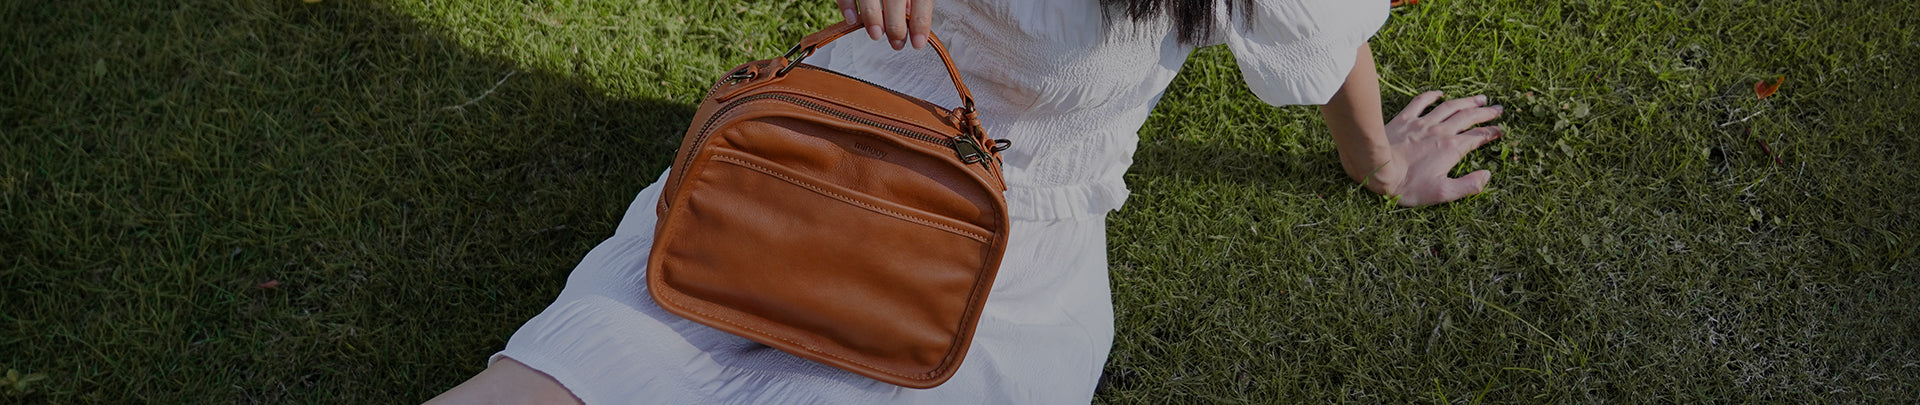 Genuine Leather Handbags & Purses | Leather Handbag for Women